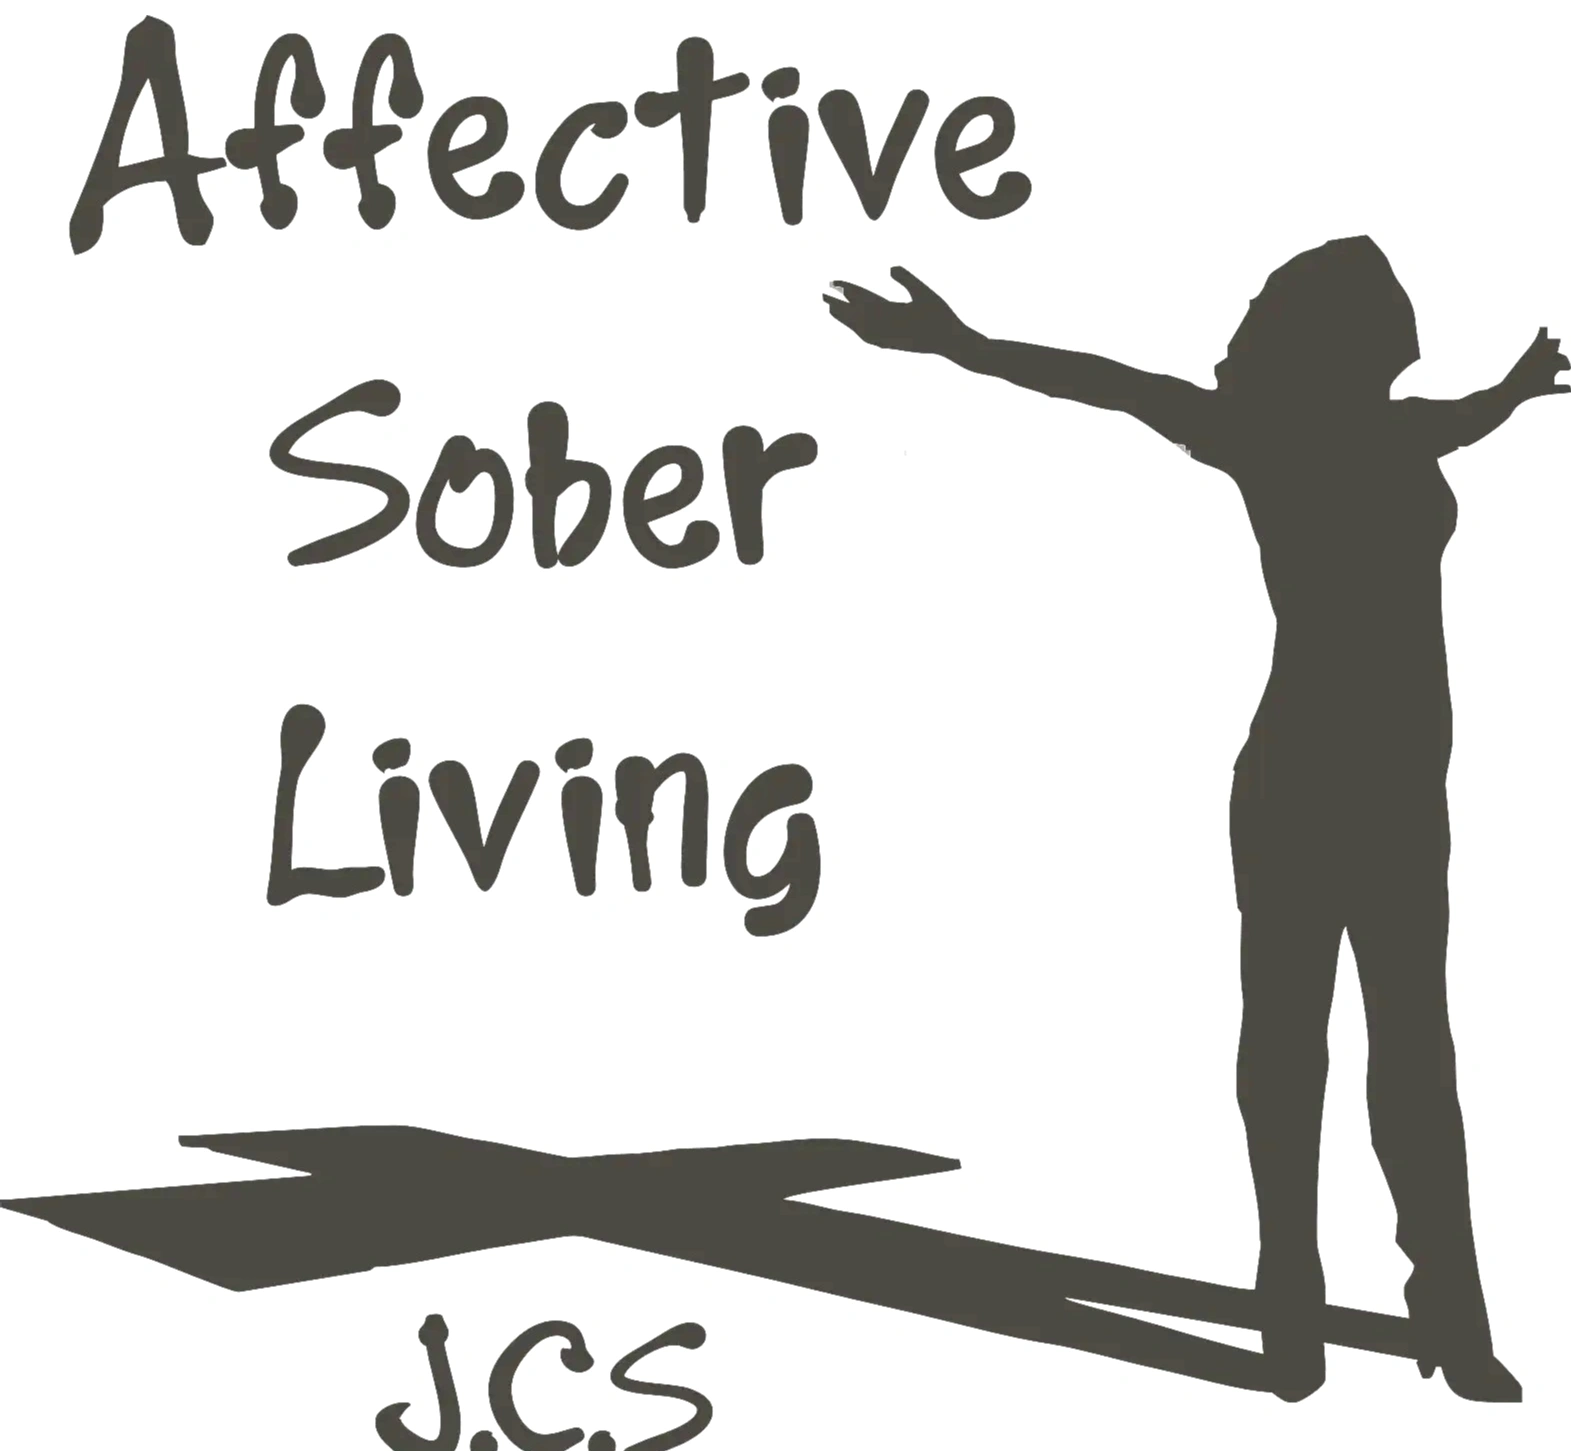 J.C. S. Affective Sober Living Logo